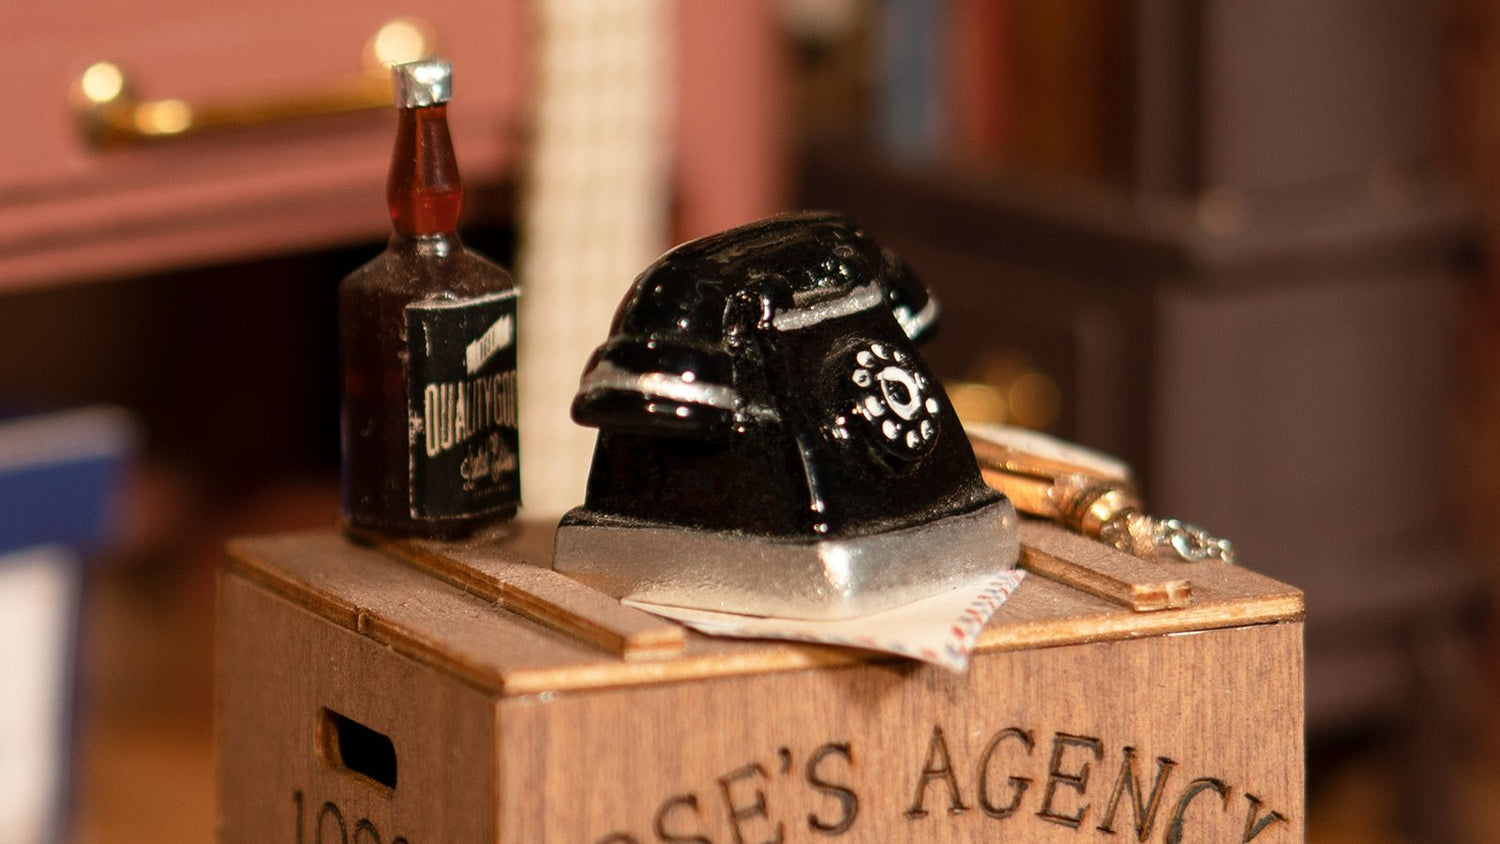 Mose's Detective Agency DIY Miniature House Kit - DIYative™